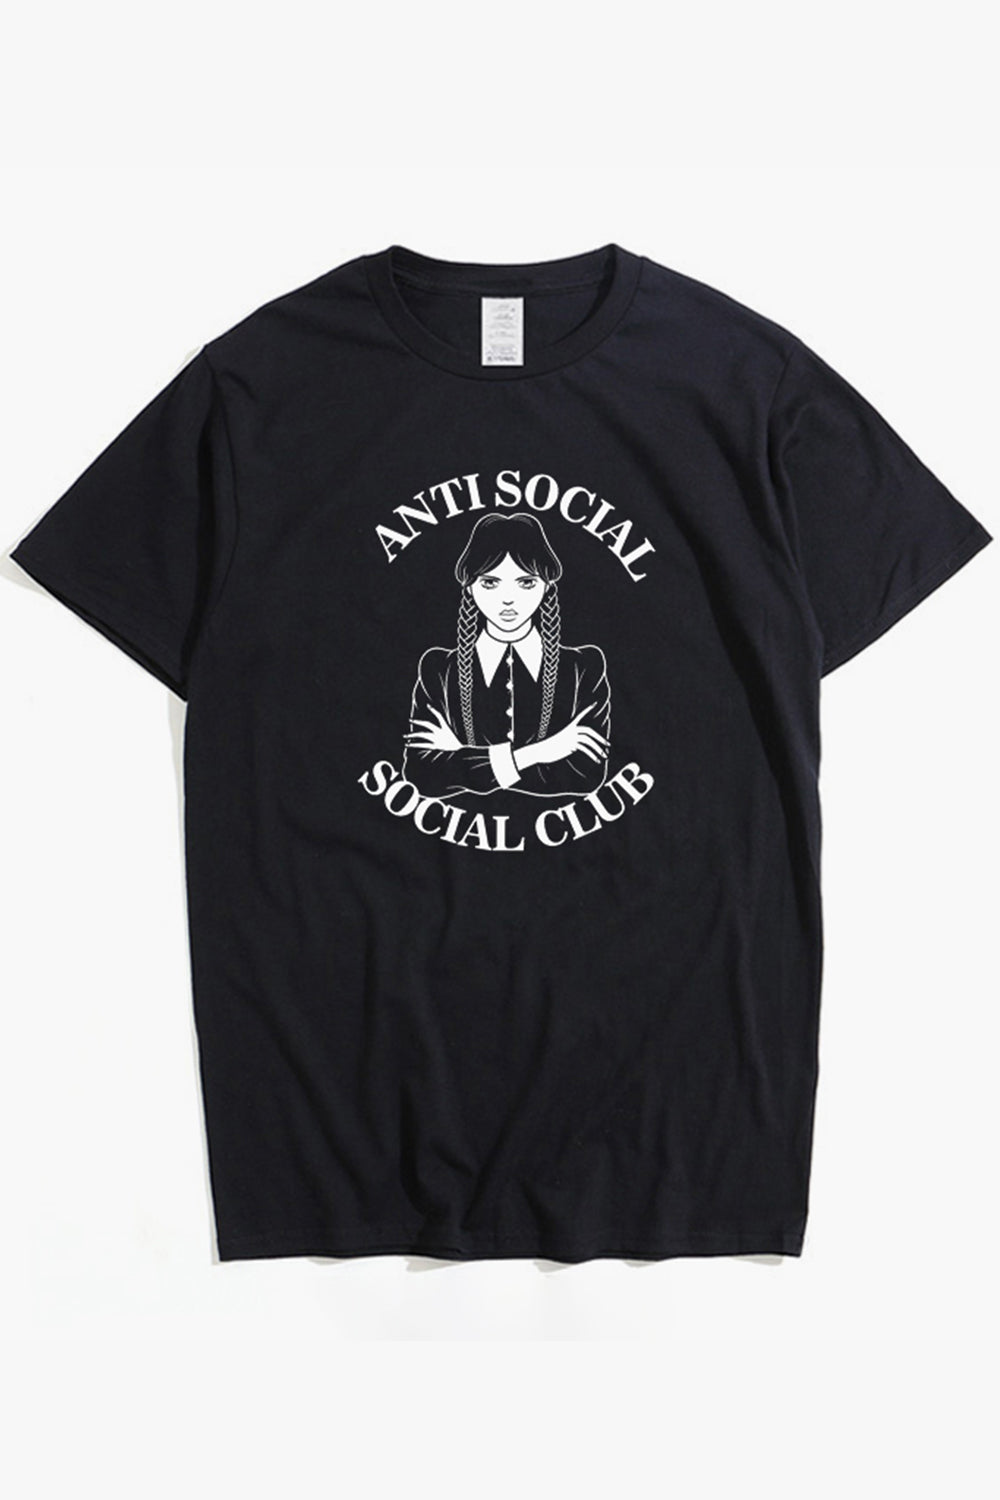 Wednesday Black Tee Anti Social Social Club - Aesthetic Shop